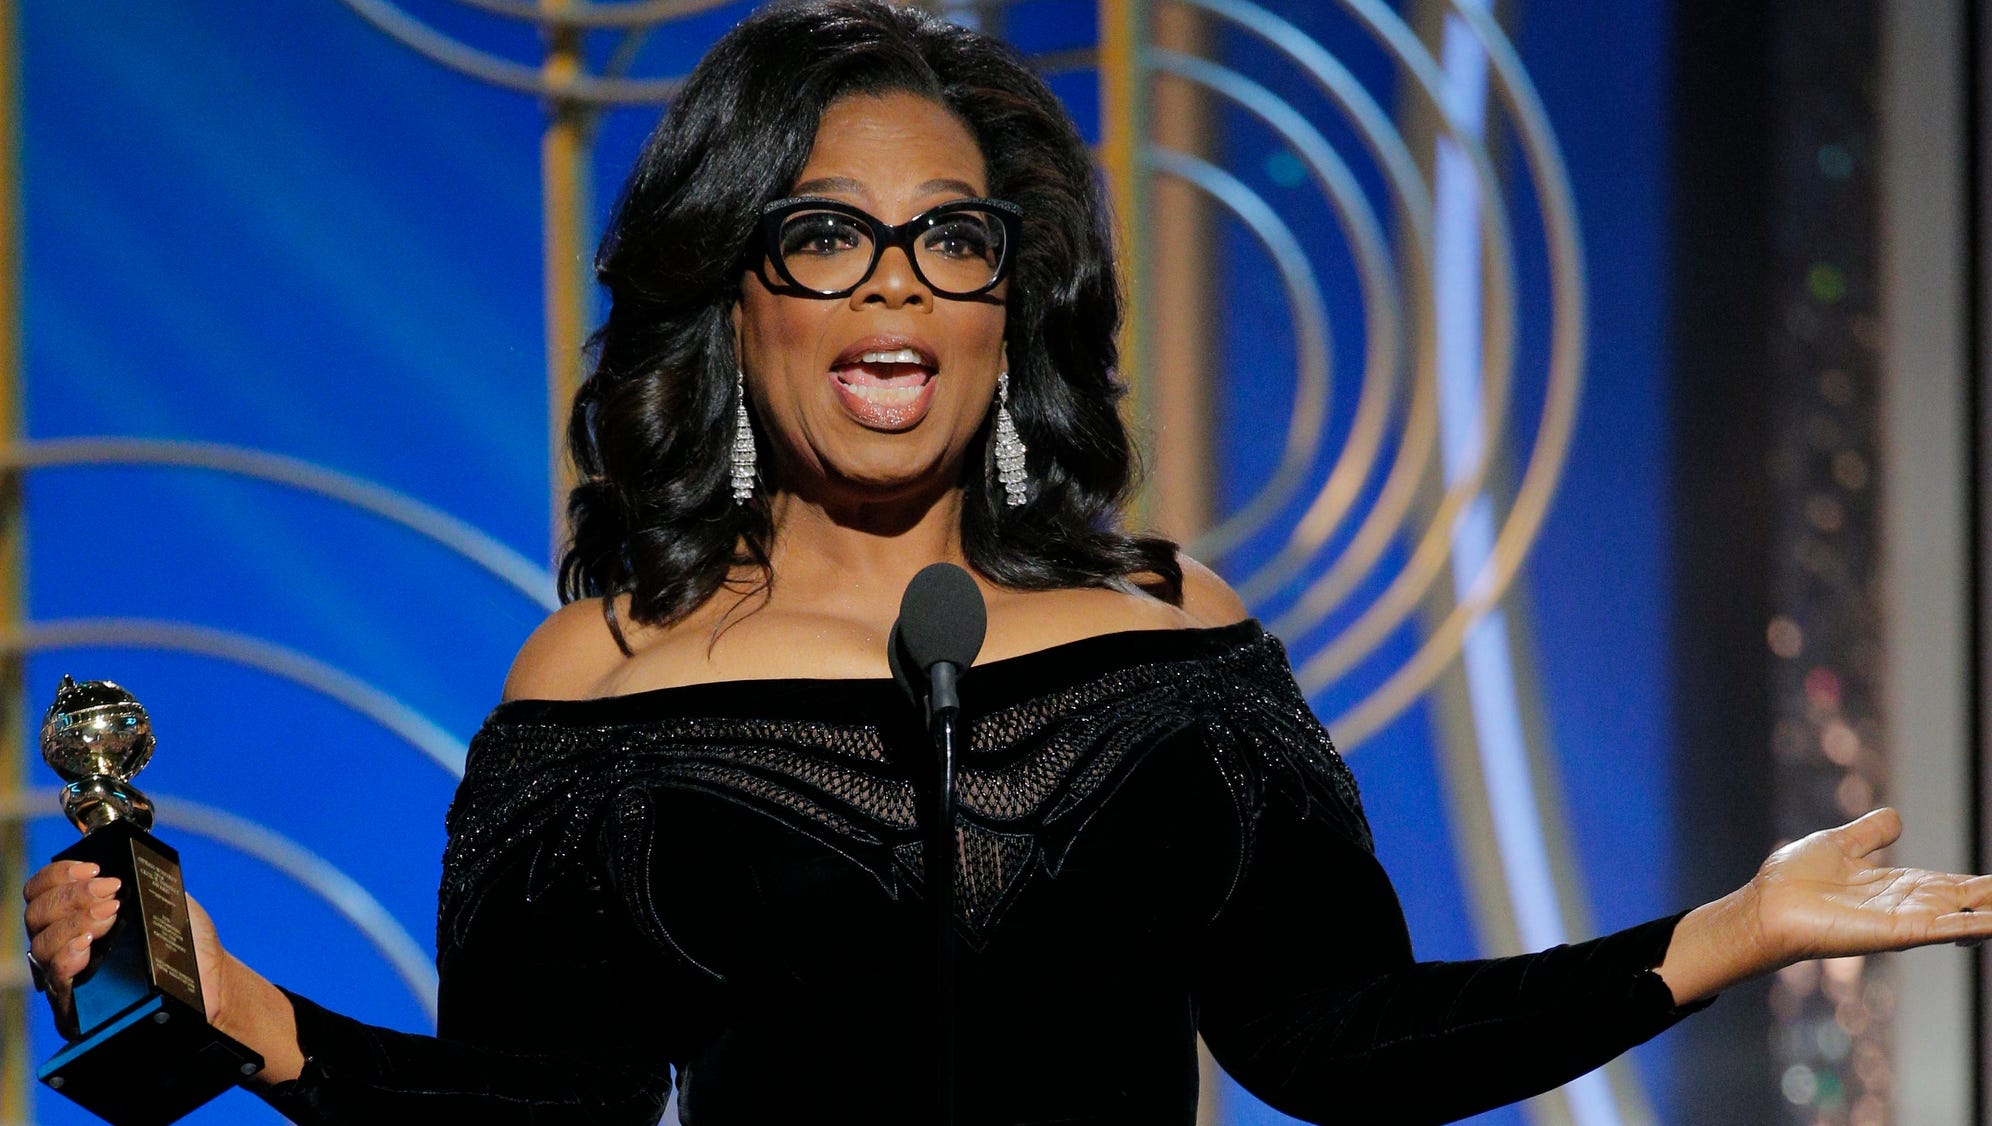 Oprah Winfrey 2020? Her Golden Globes speech was downright presidential